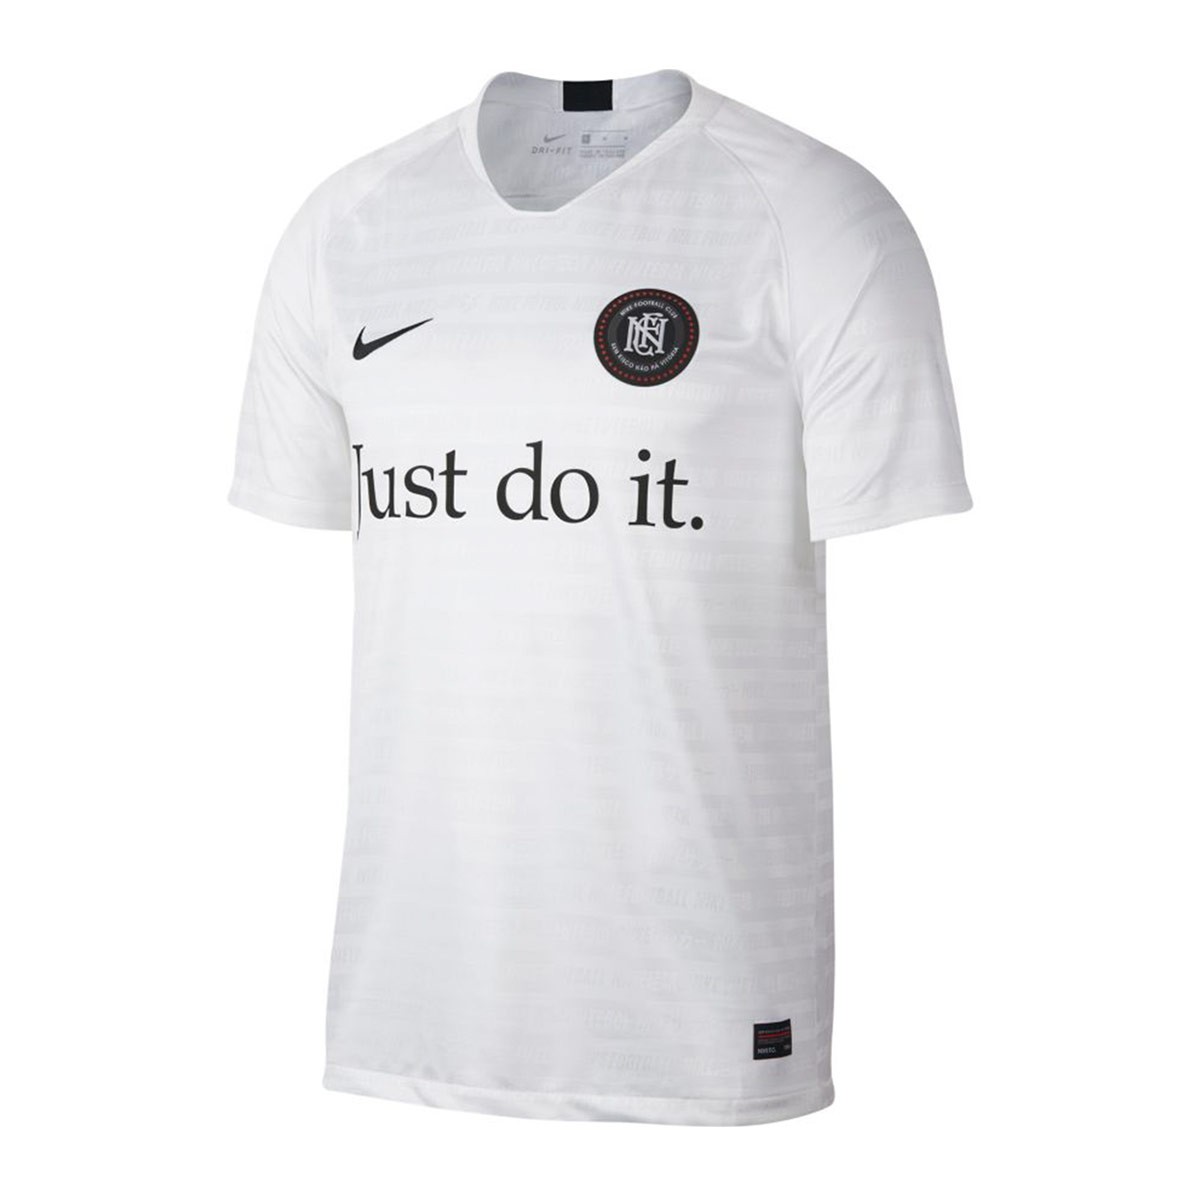 Jersey Nike Nike F.C. Away White-Black - Football store Fútbol Emotion